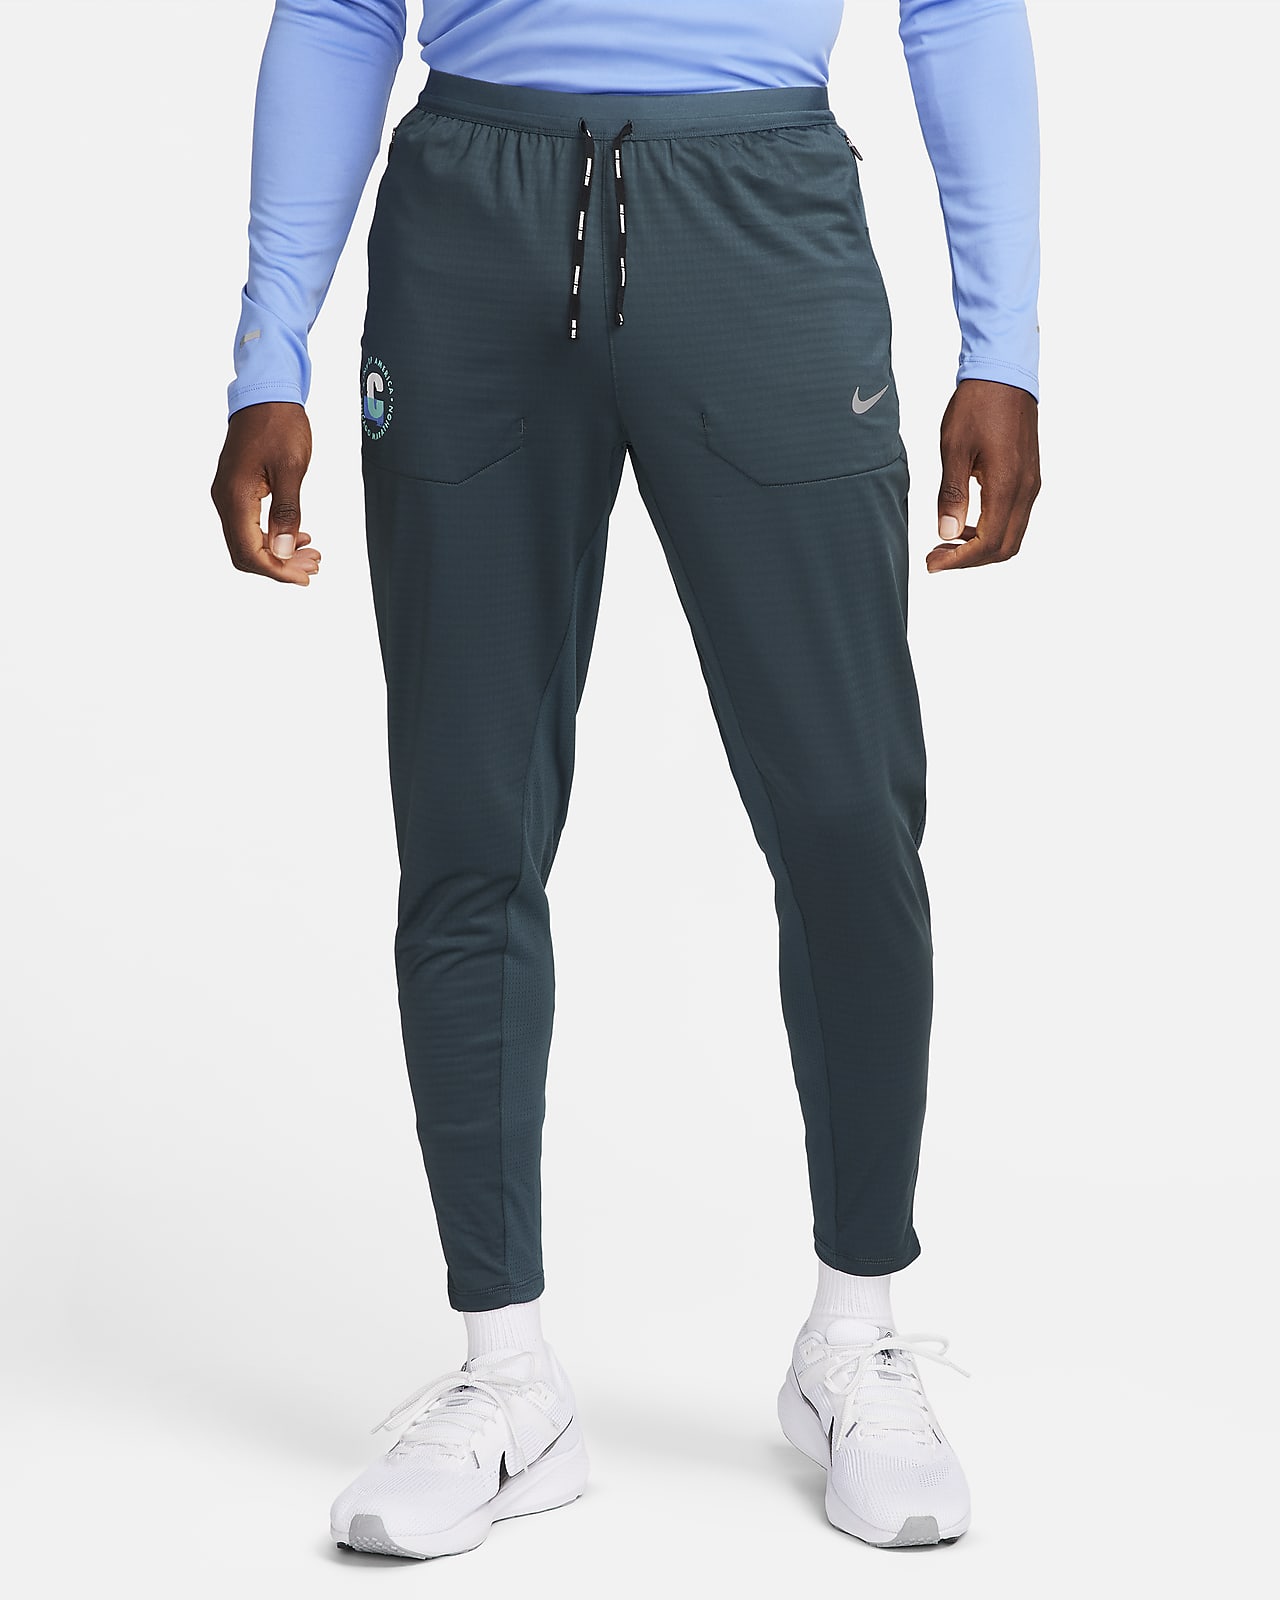 Nike Dri-FIT Phantom Elite Men's Knit Running Pants